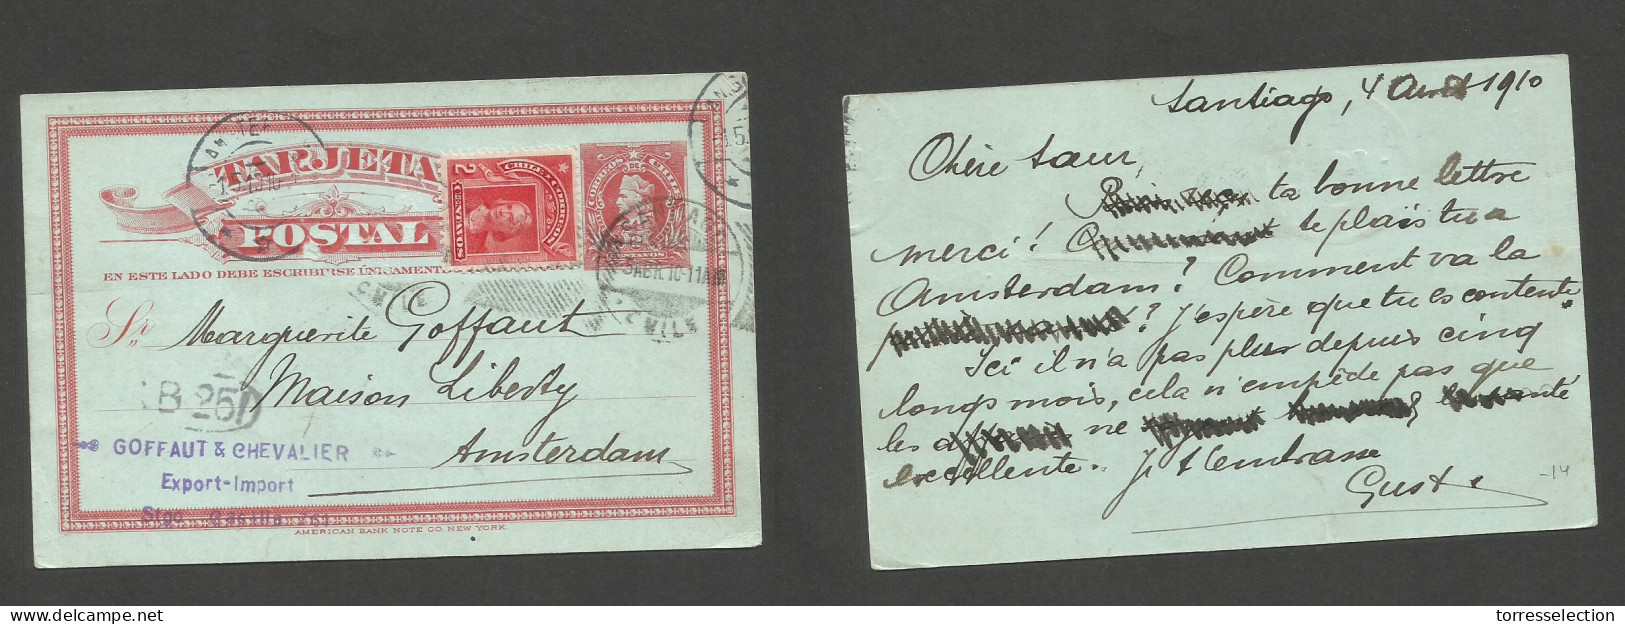 CHILE - Stationery. 1910 (4 Aug) Stgo - Netherlands, Amsterdam (15 Oct) 2c Red Stat Card + 2c Red Adtl + Dest. Fine. - Chile